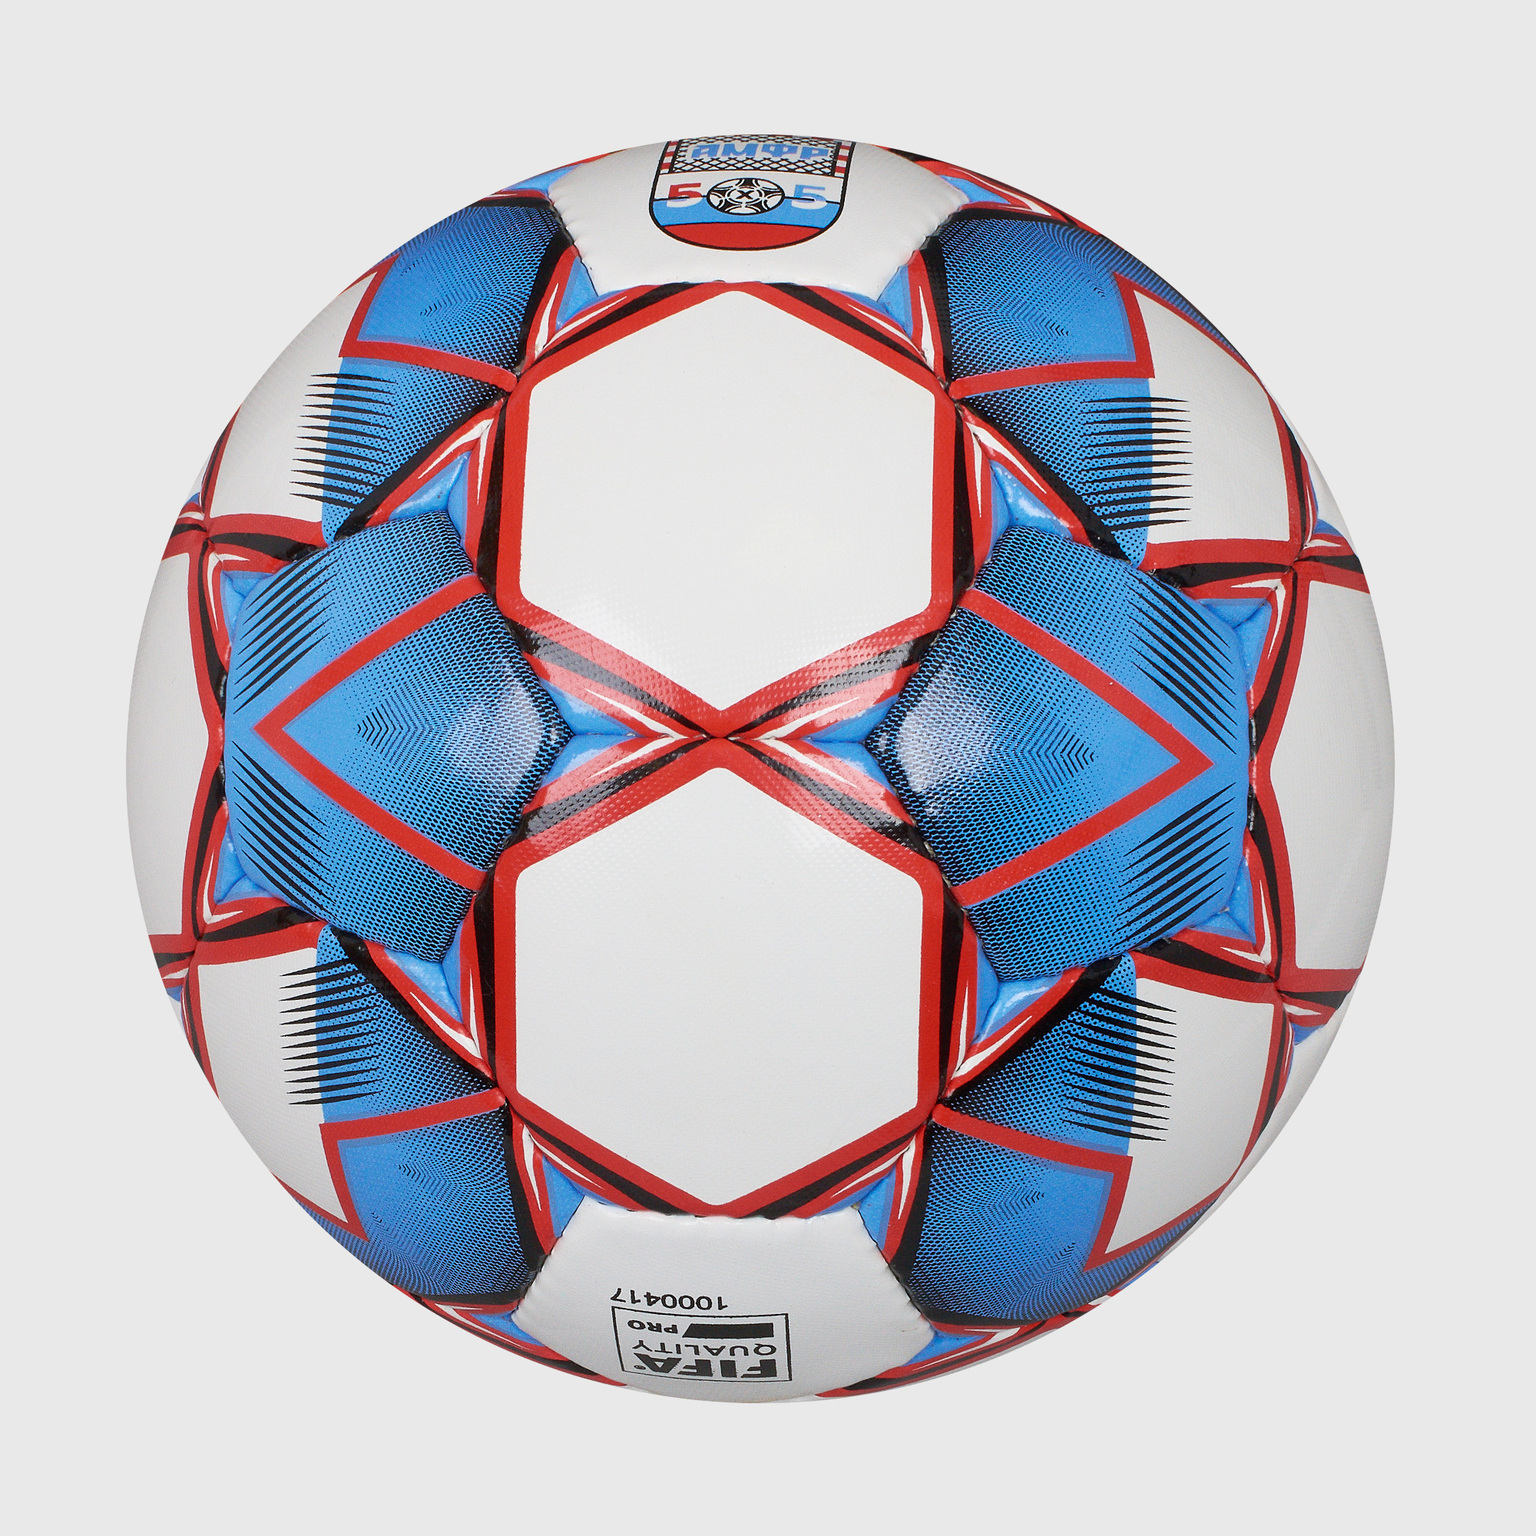 Футзальный мяч Select Super League АМФР РФС FIFA 850718-172 